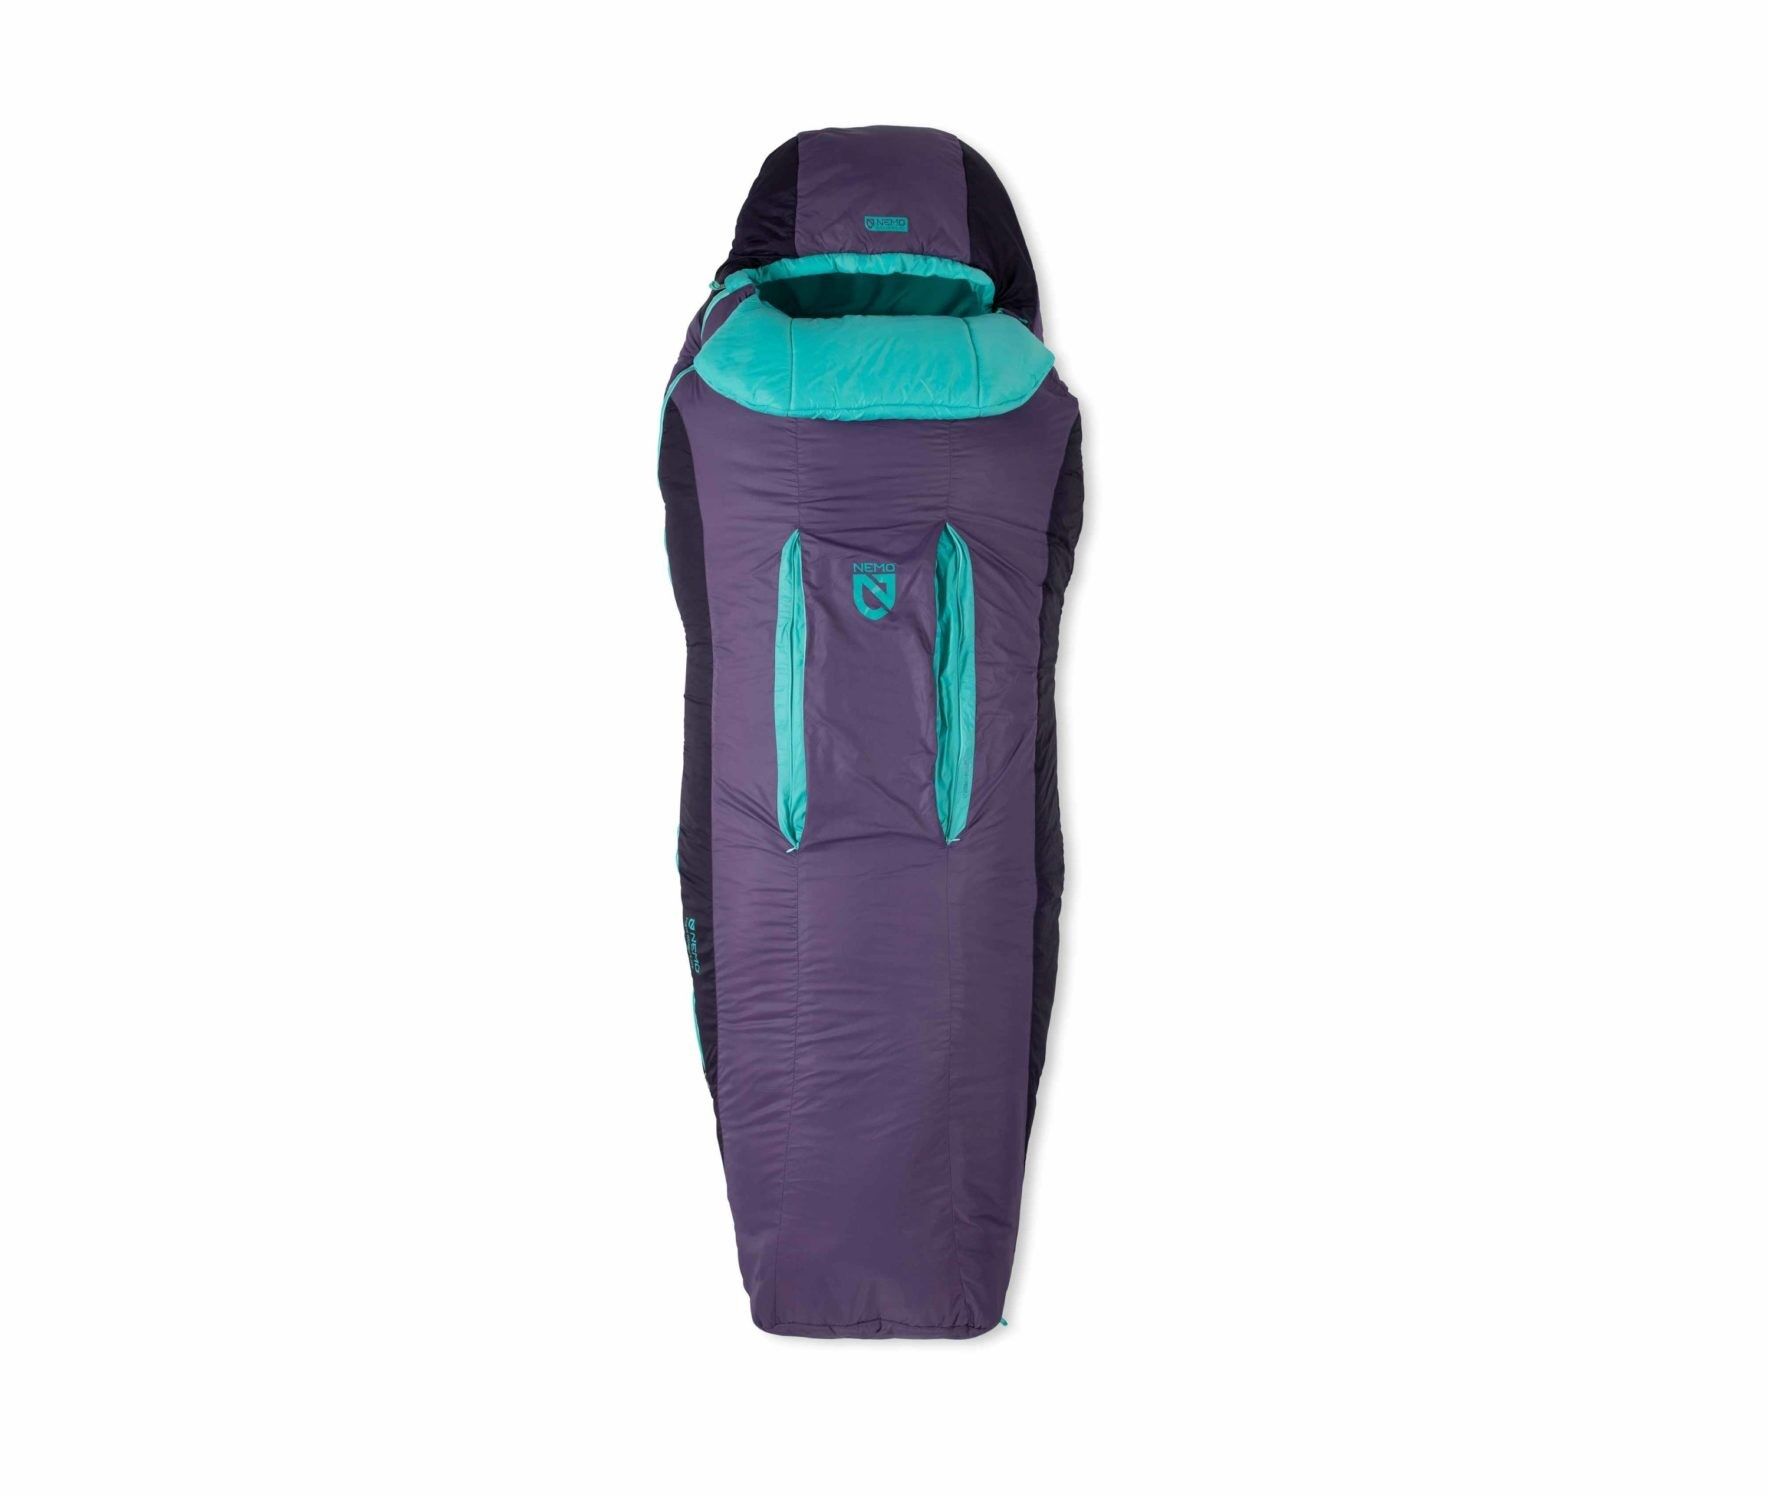 Nemo Forte 35 - Sleeping bag - Women's